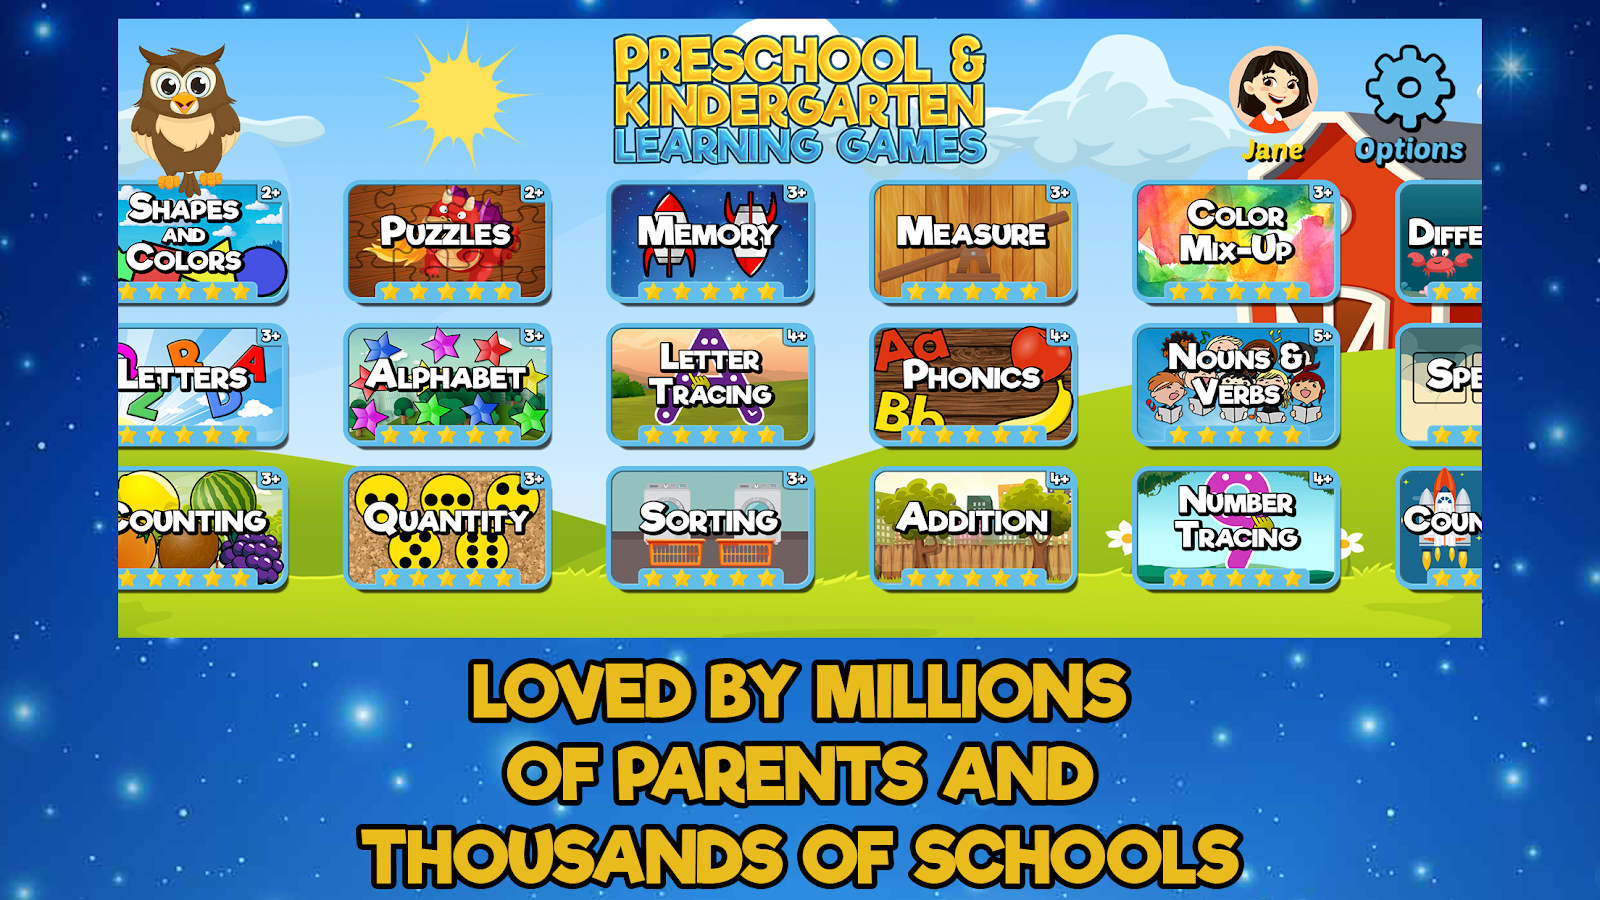 instal the last version for iphoneKids Preschool Learning Games